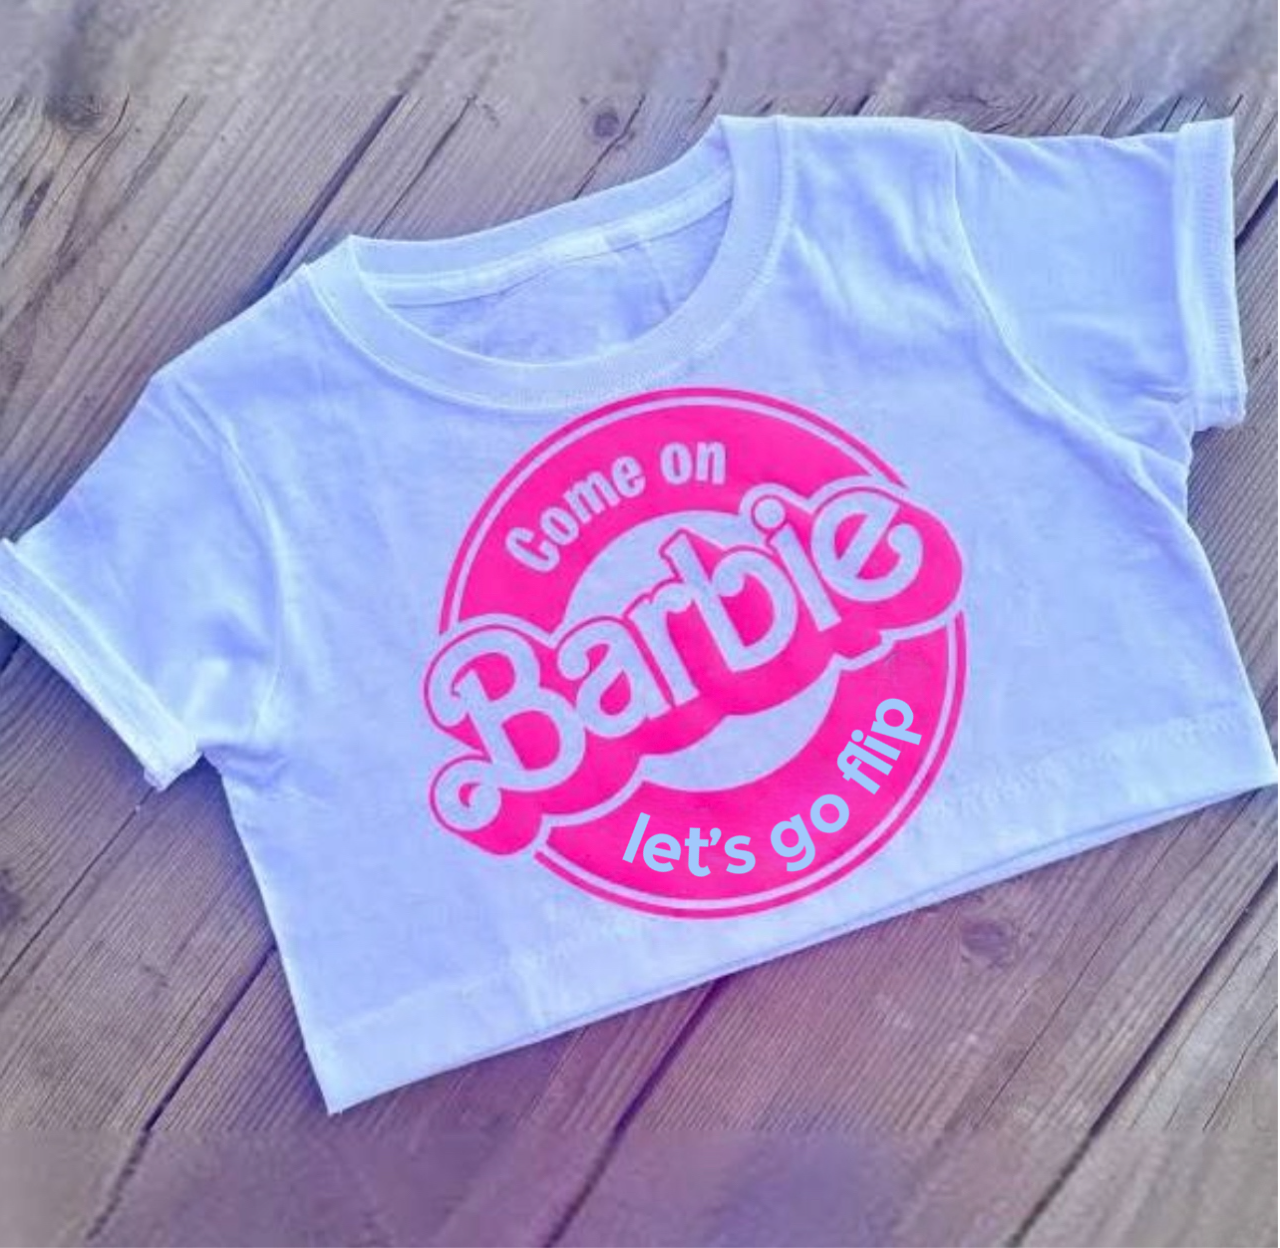 Come on barbie lets go flip CROP top| Gymnastics Barbie tee| Gymnastics crop top|Gymnast tee| Barbie movie| Barbie shirt| Barbie shirt| Barbie tee| Barbie Girl shirt